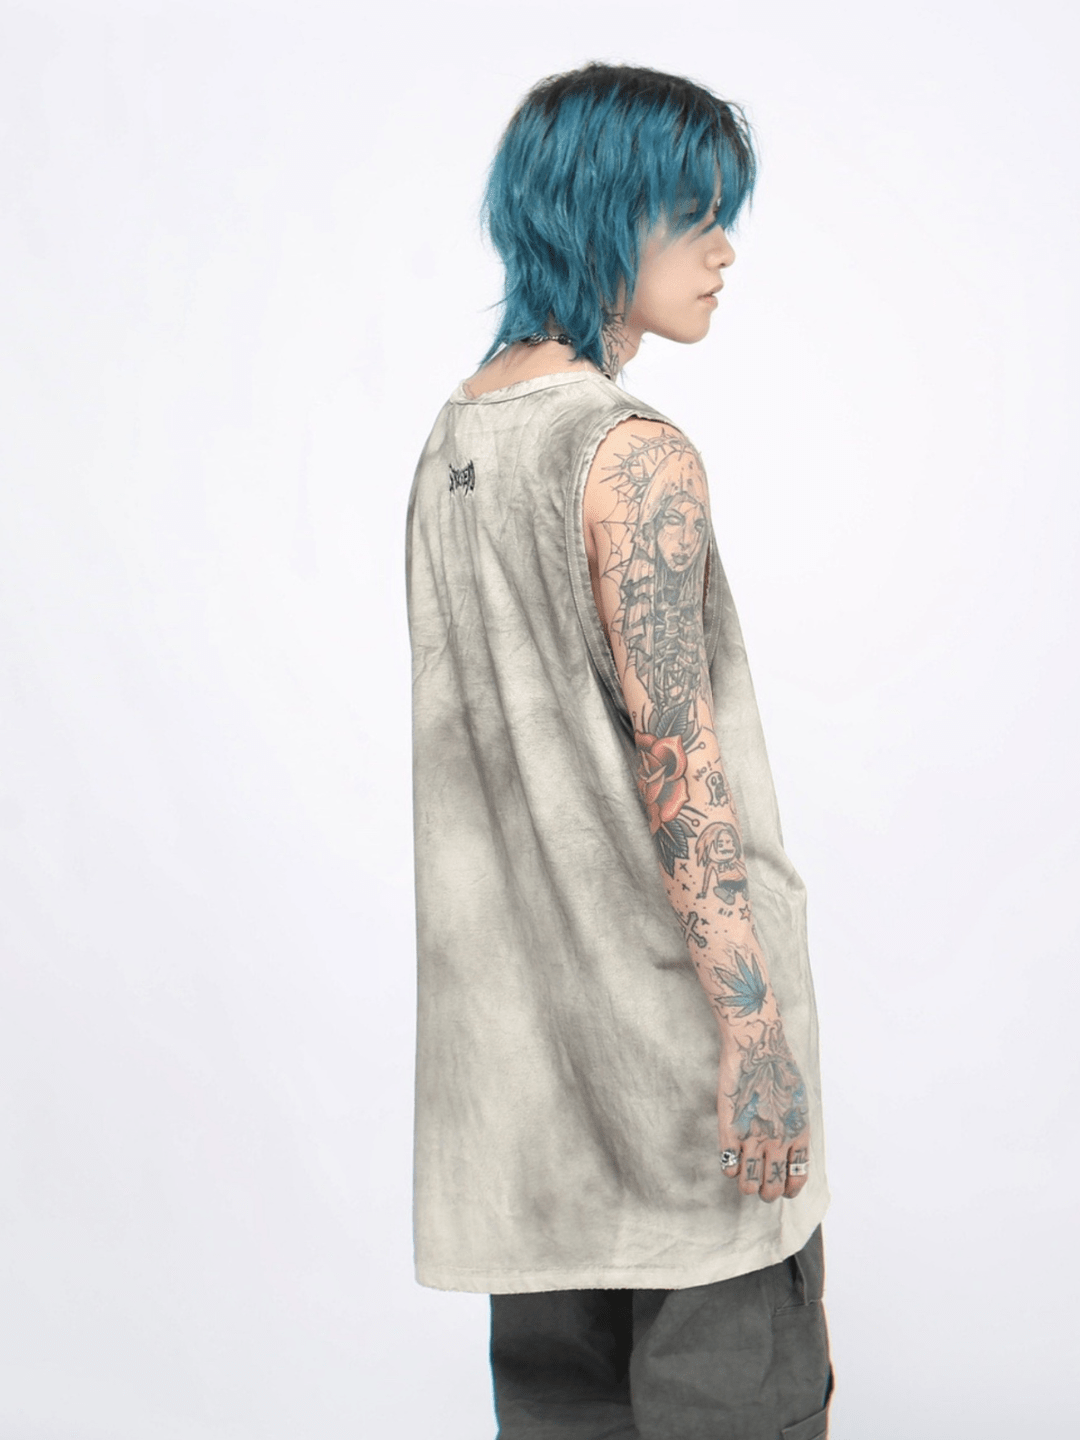 【Mz】 Vintage Washed Embroidered Sleeveless T-Shirt na1184 